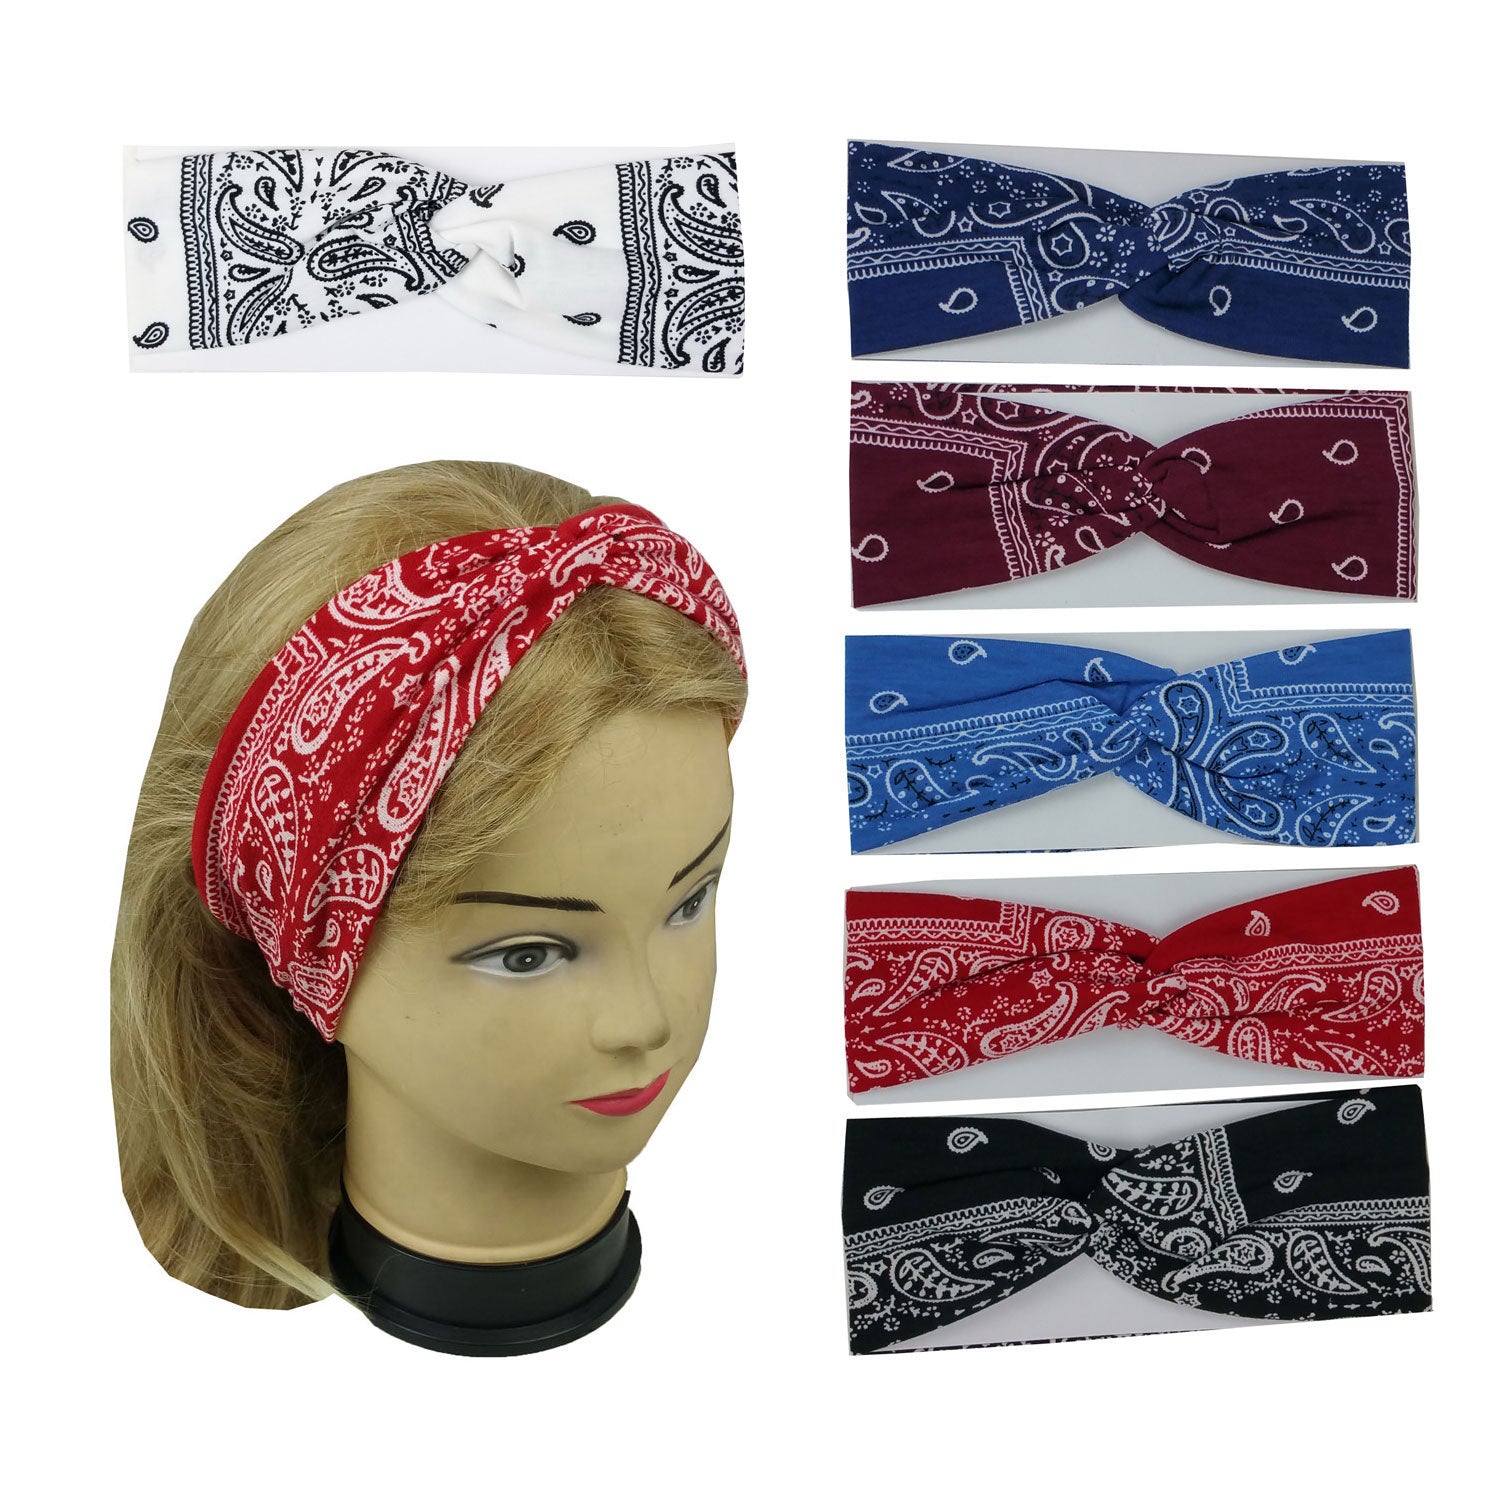 6 Assorted New 3 Paisley Yoga Headbands For Women Girls Hairbands